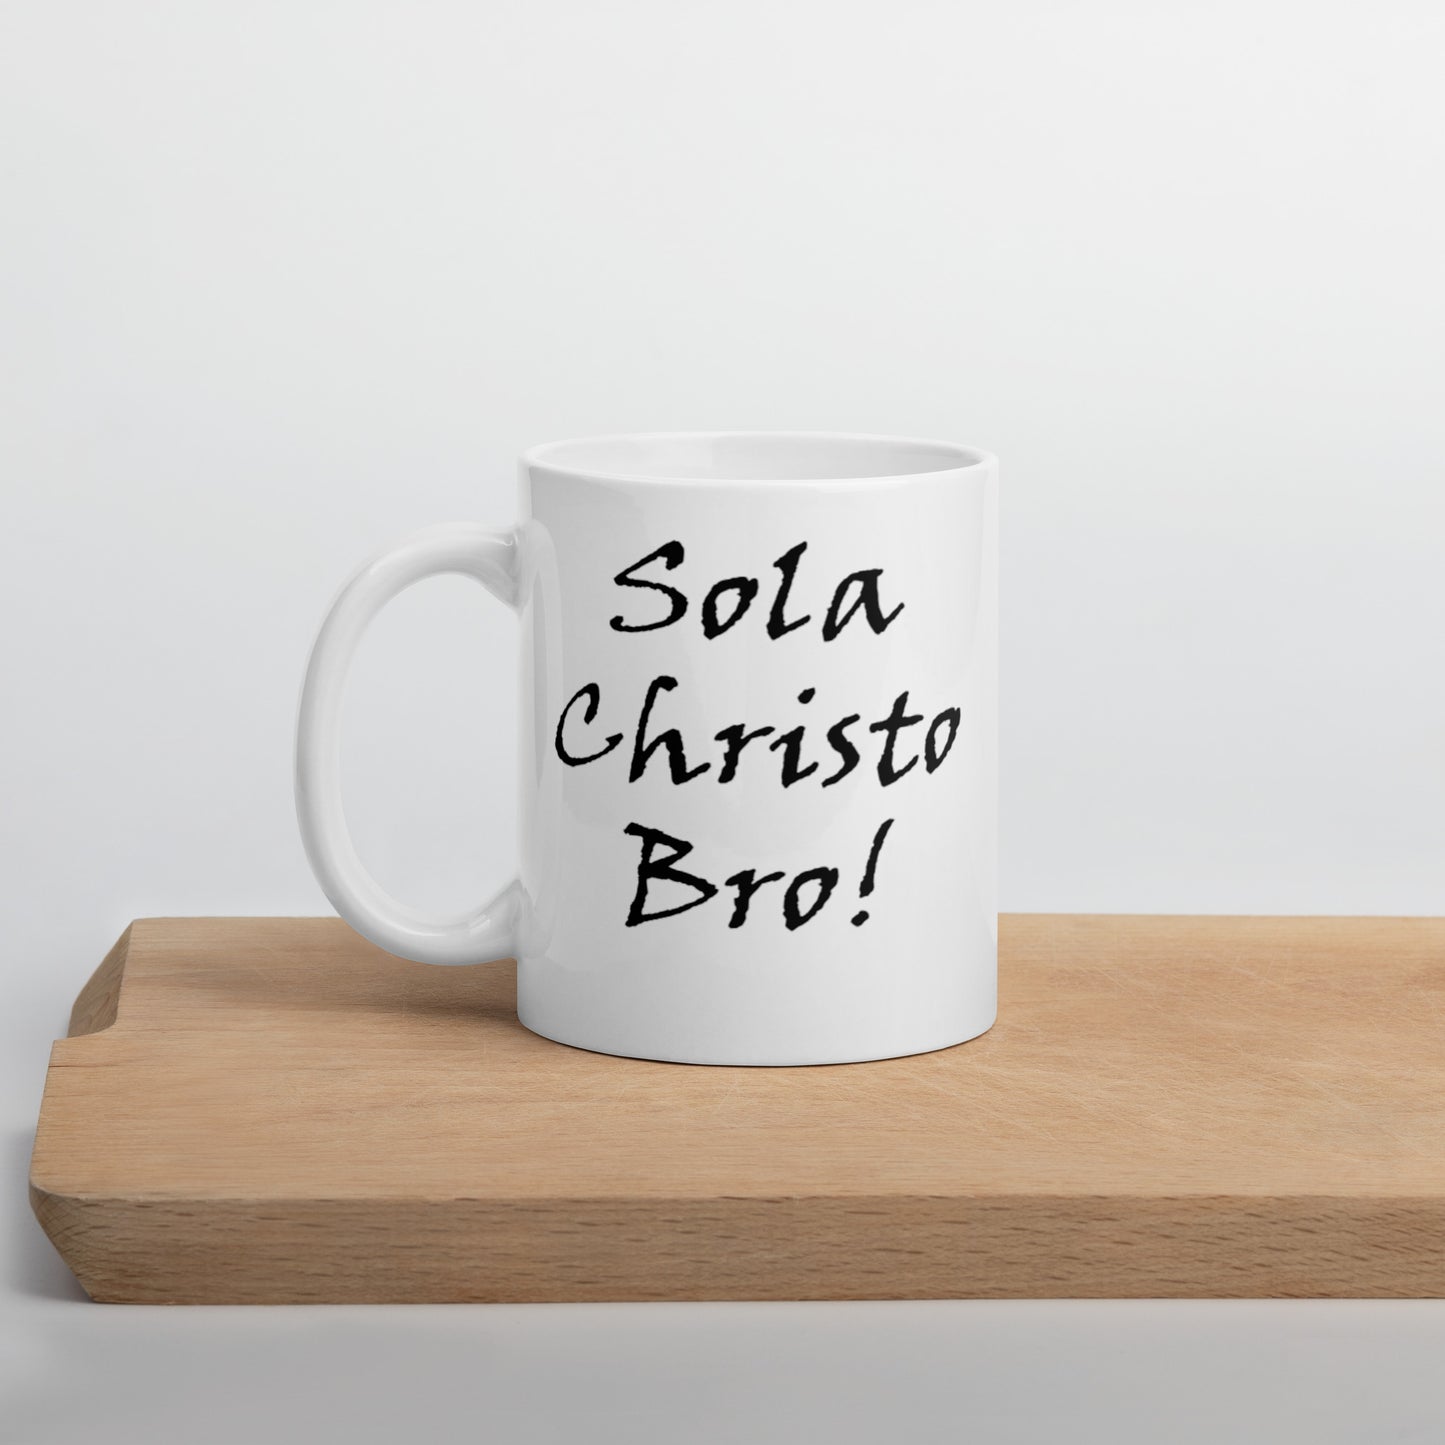 Sola Christo Bro! White Glossy Ceramic Mug - Solid Rock Designs | Christian Apparel